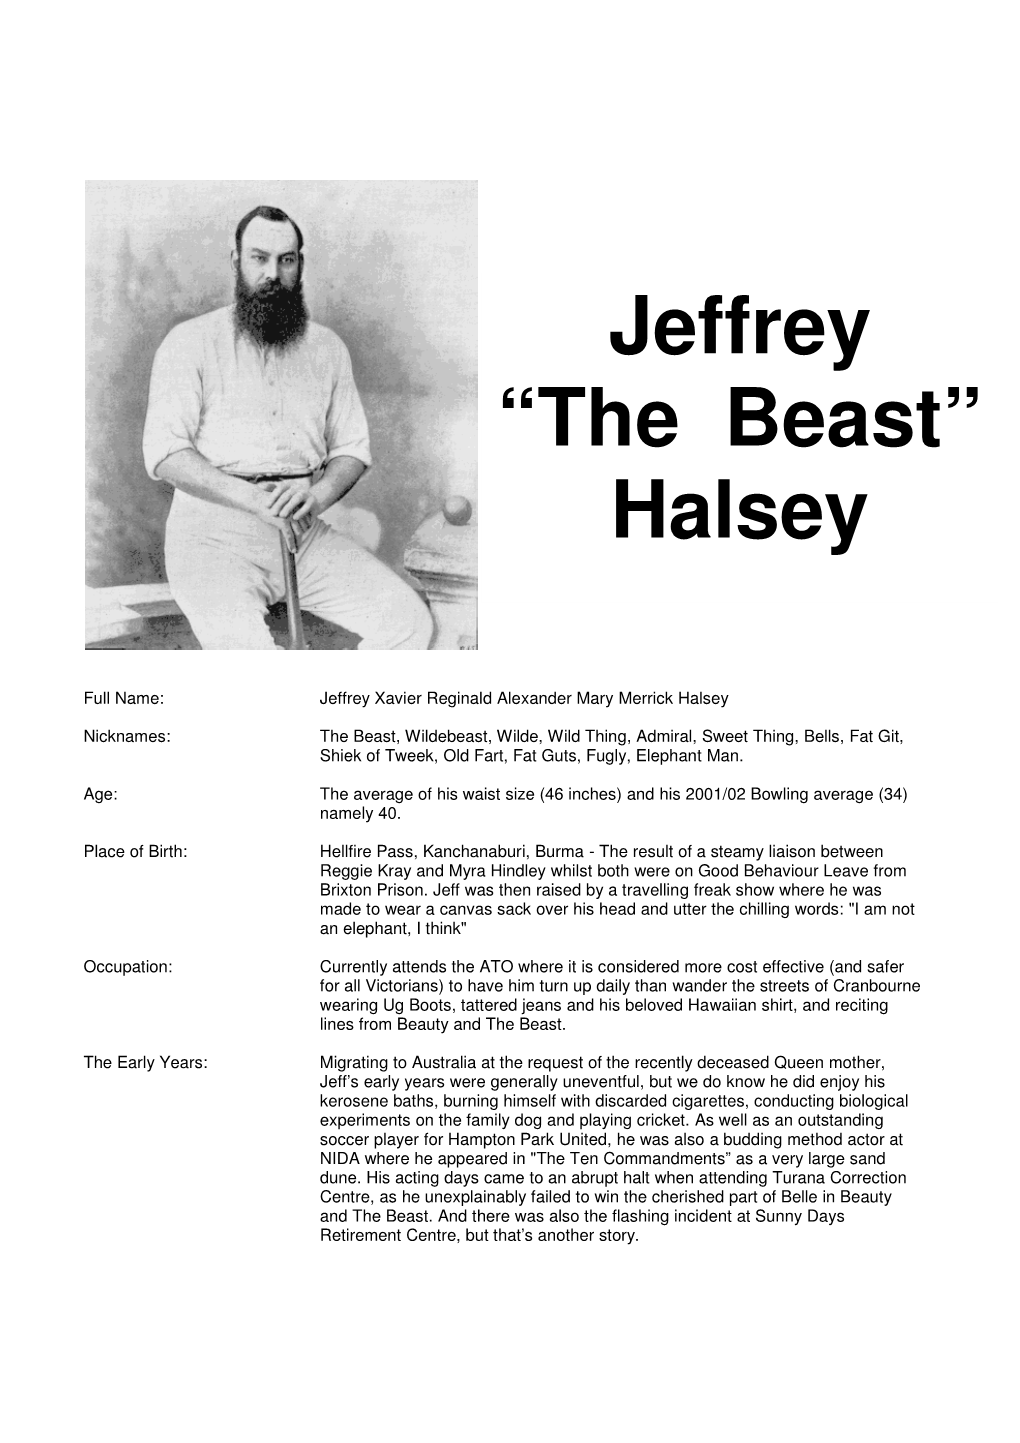 The Beast” Halsey